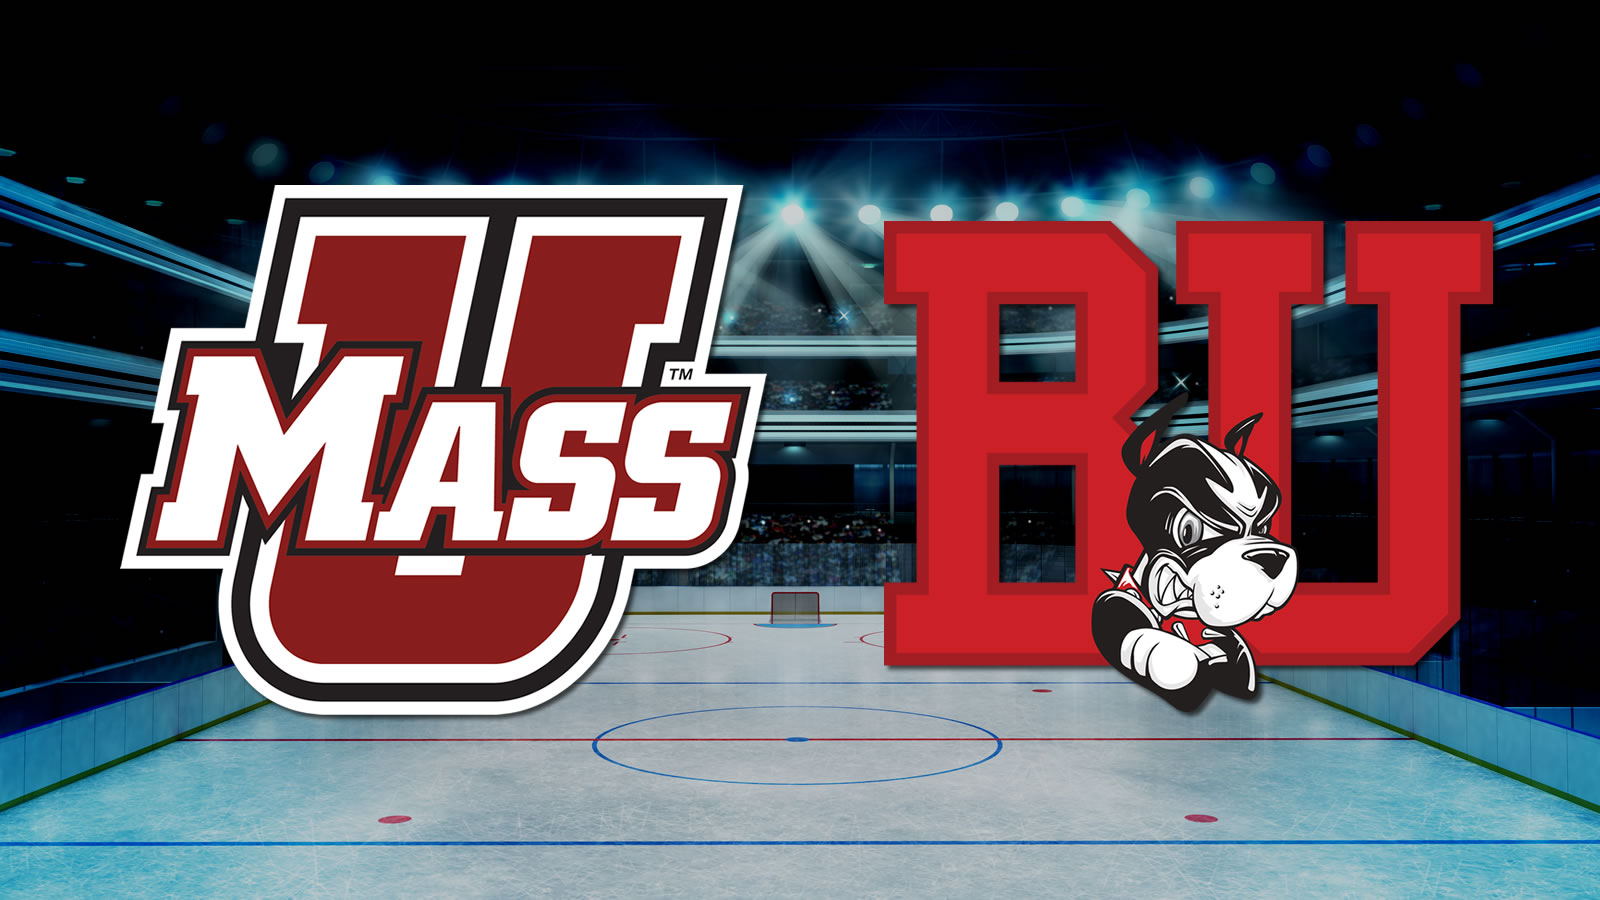 Boston College faces formidable Merrimack next in men's Hockey East  tournament - The Boston Globe